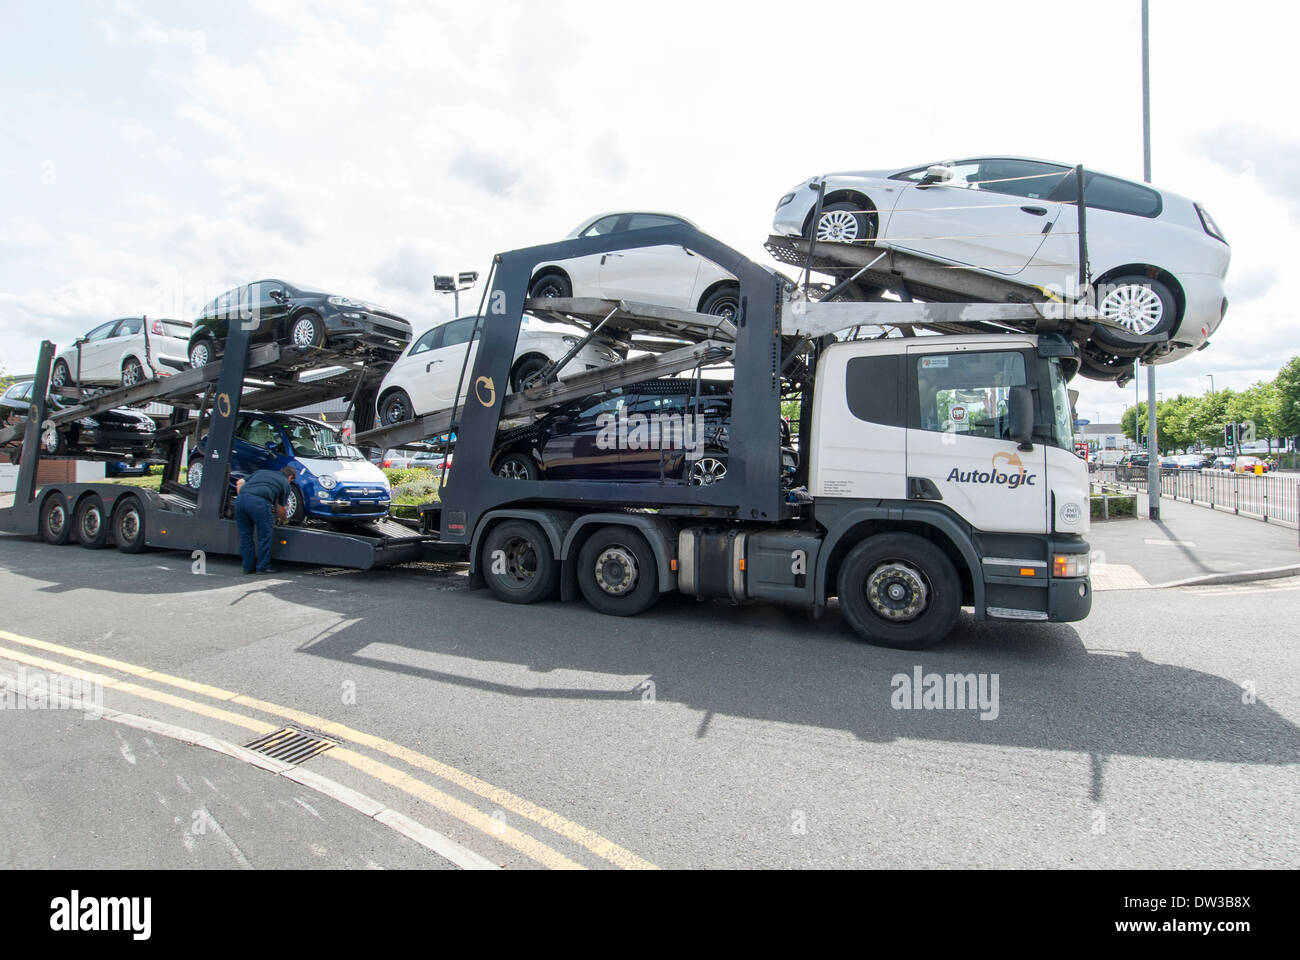 Car transporter delivering new FIAT cars to dealership, Warrington, Cheshire, England, UK Stock Photo